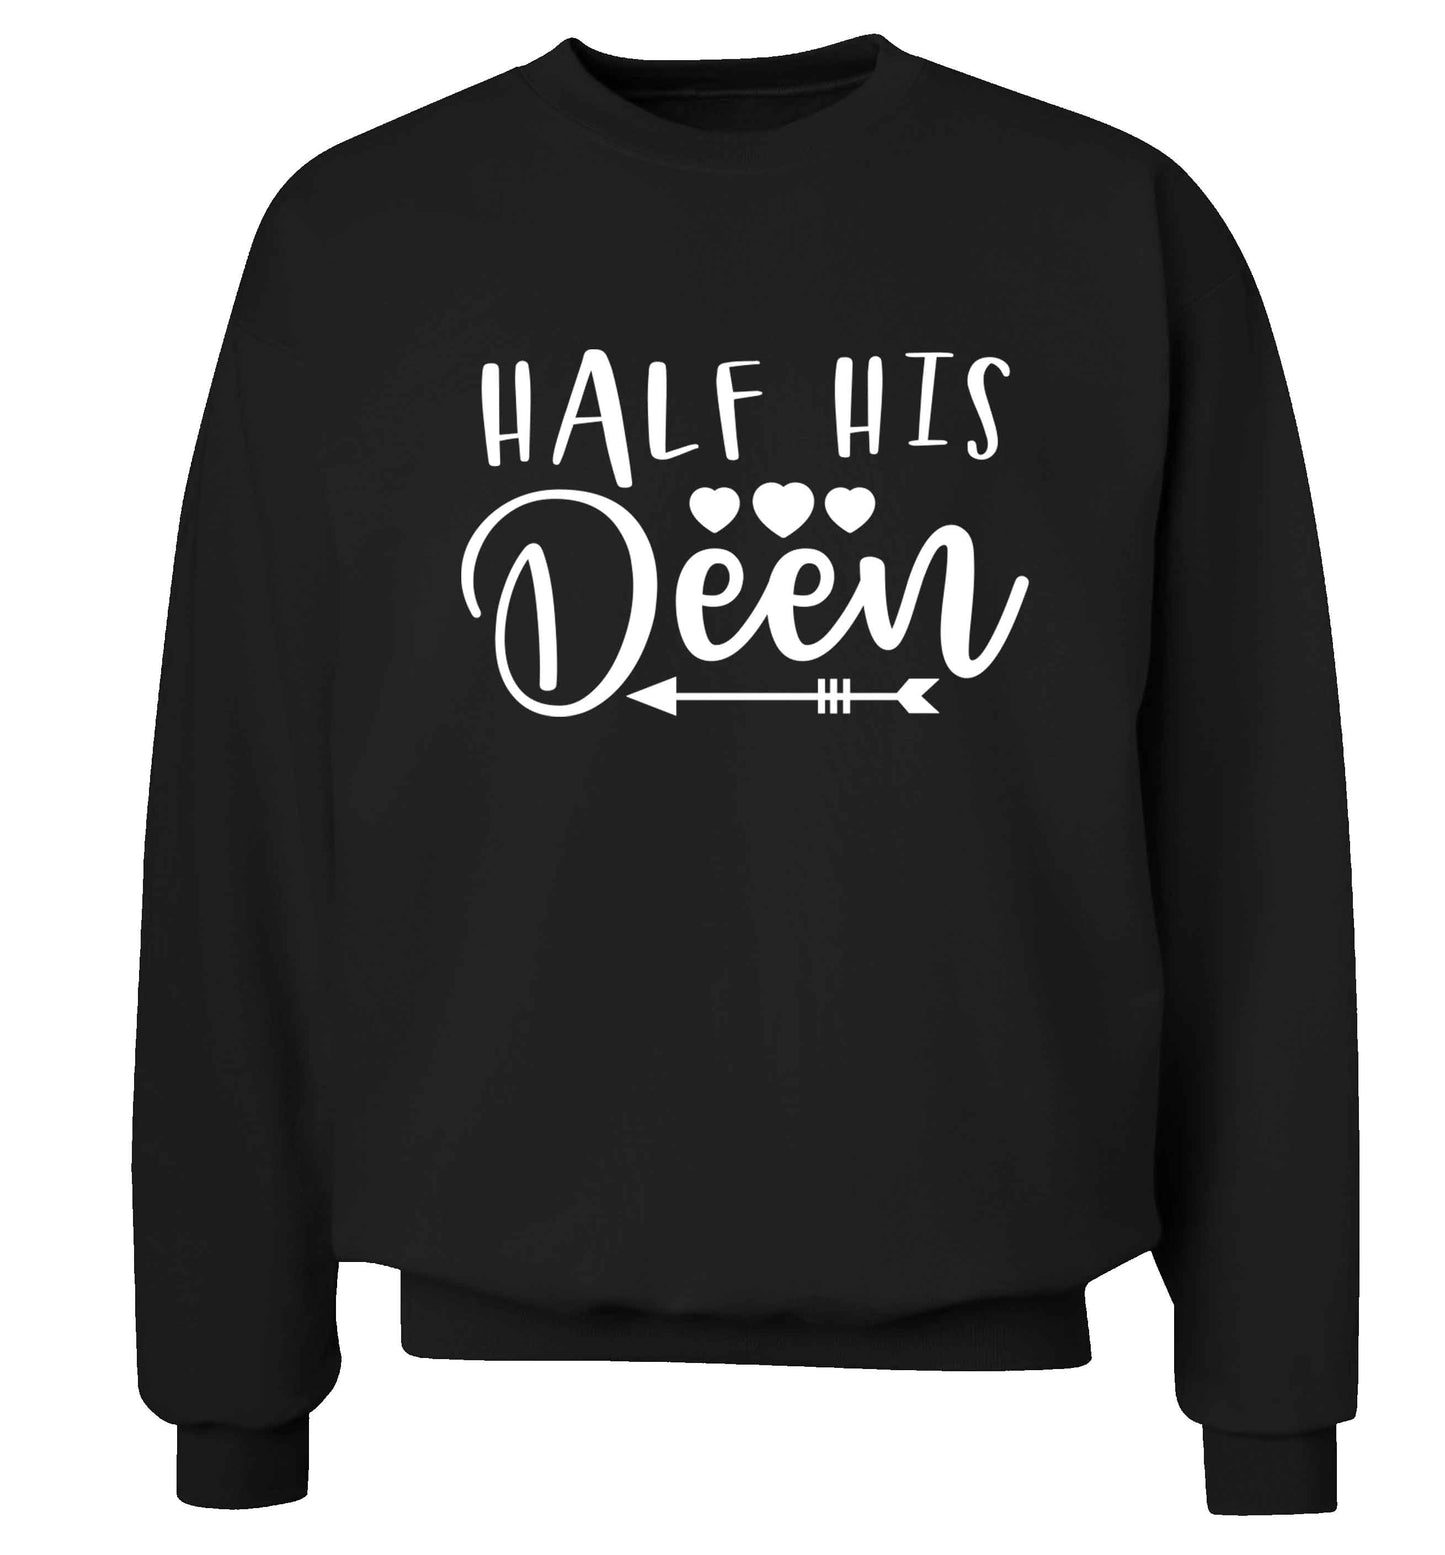 Half his deen Adult's unisex black Sweater 2XL